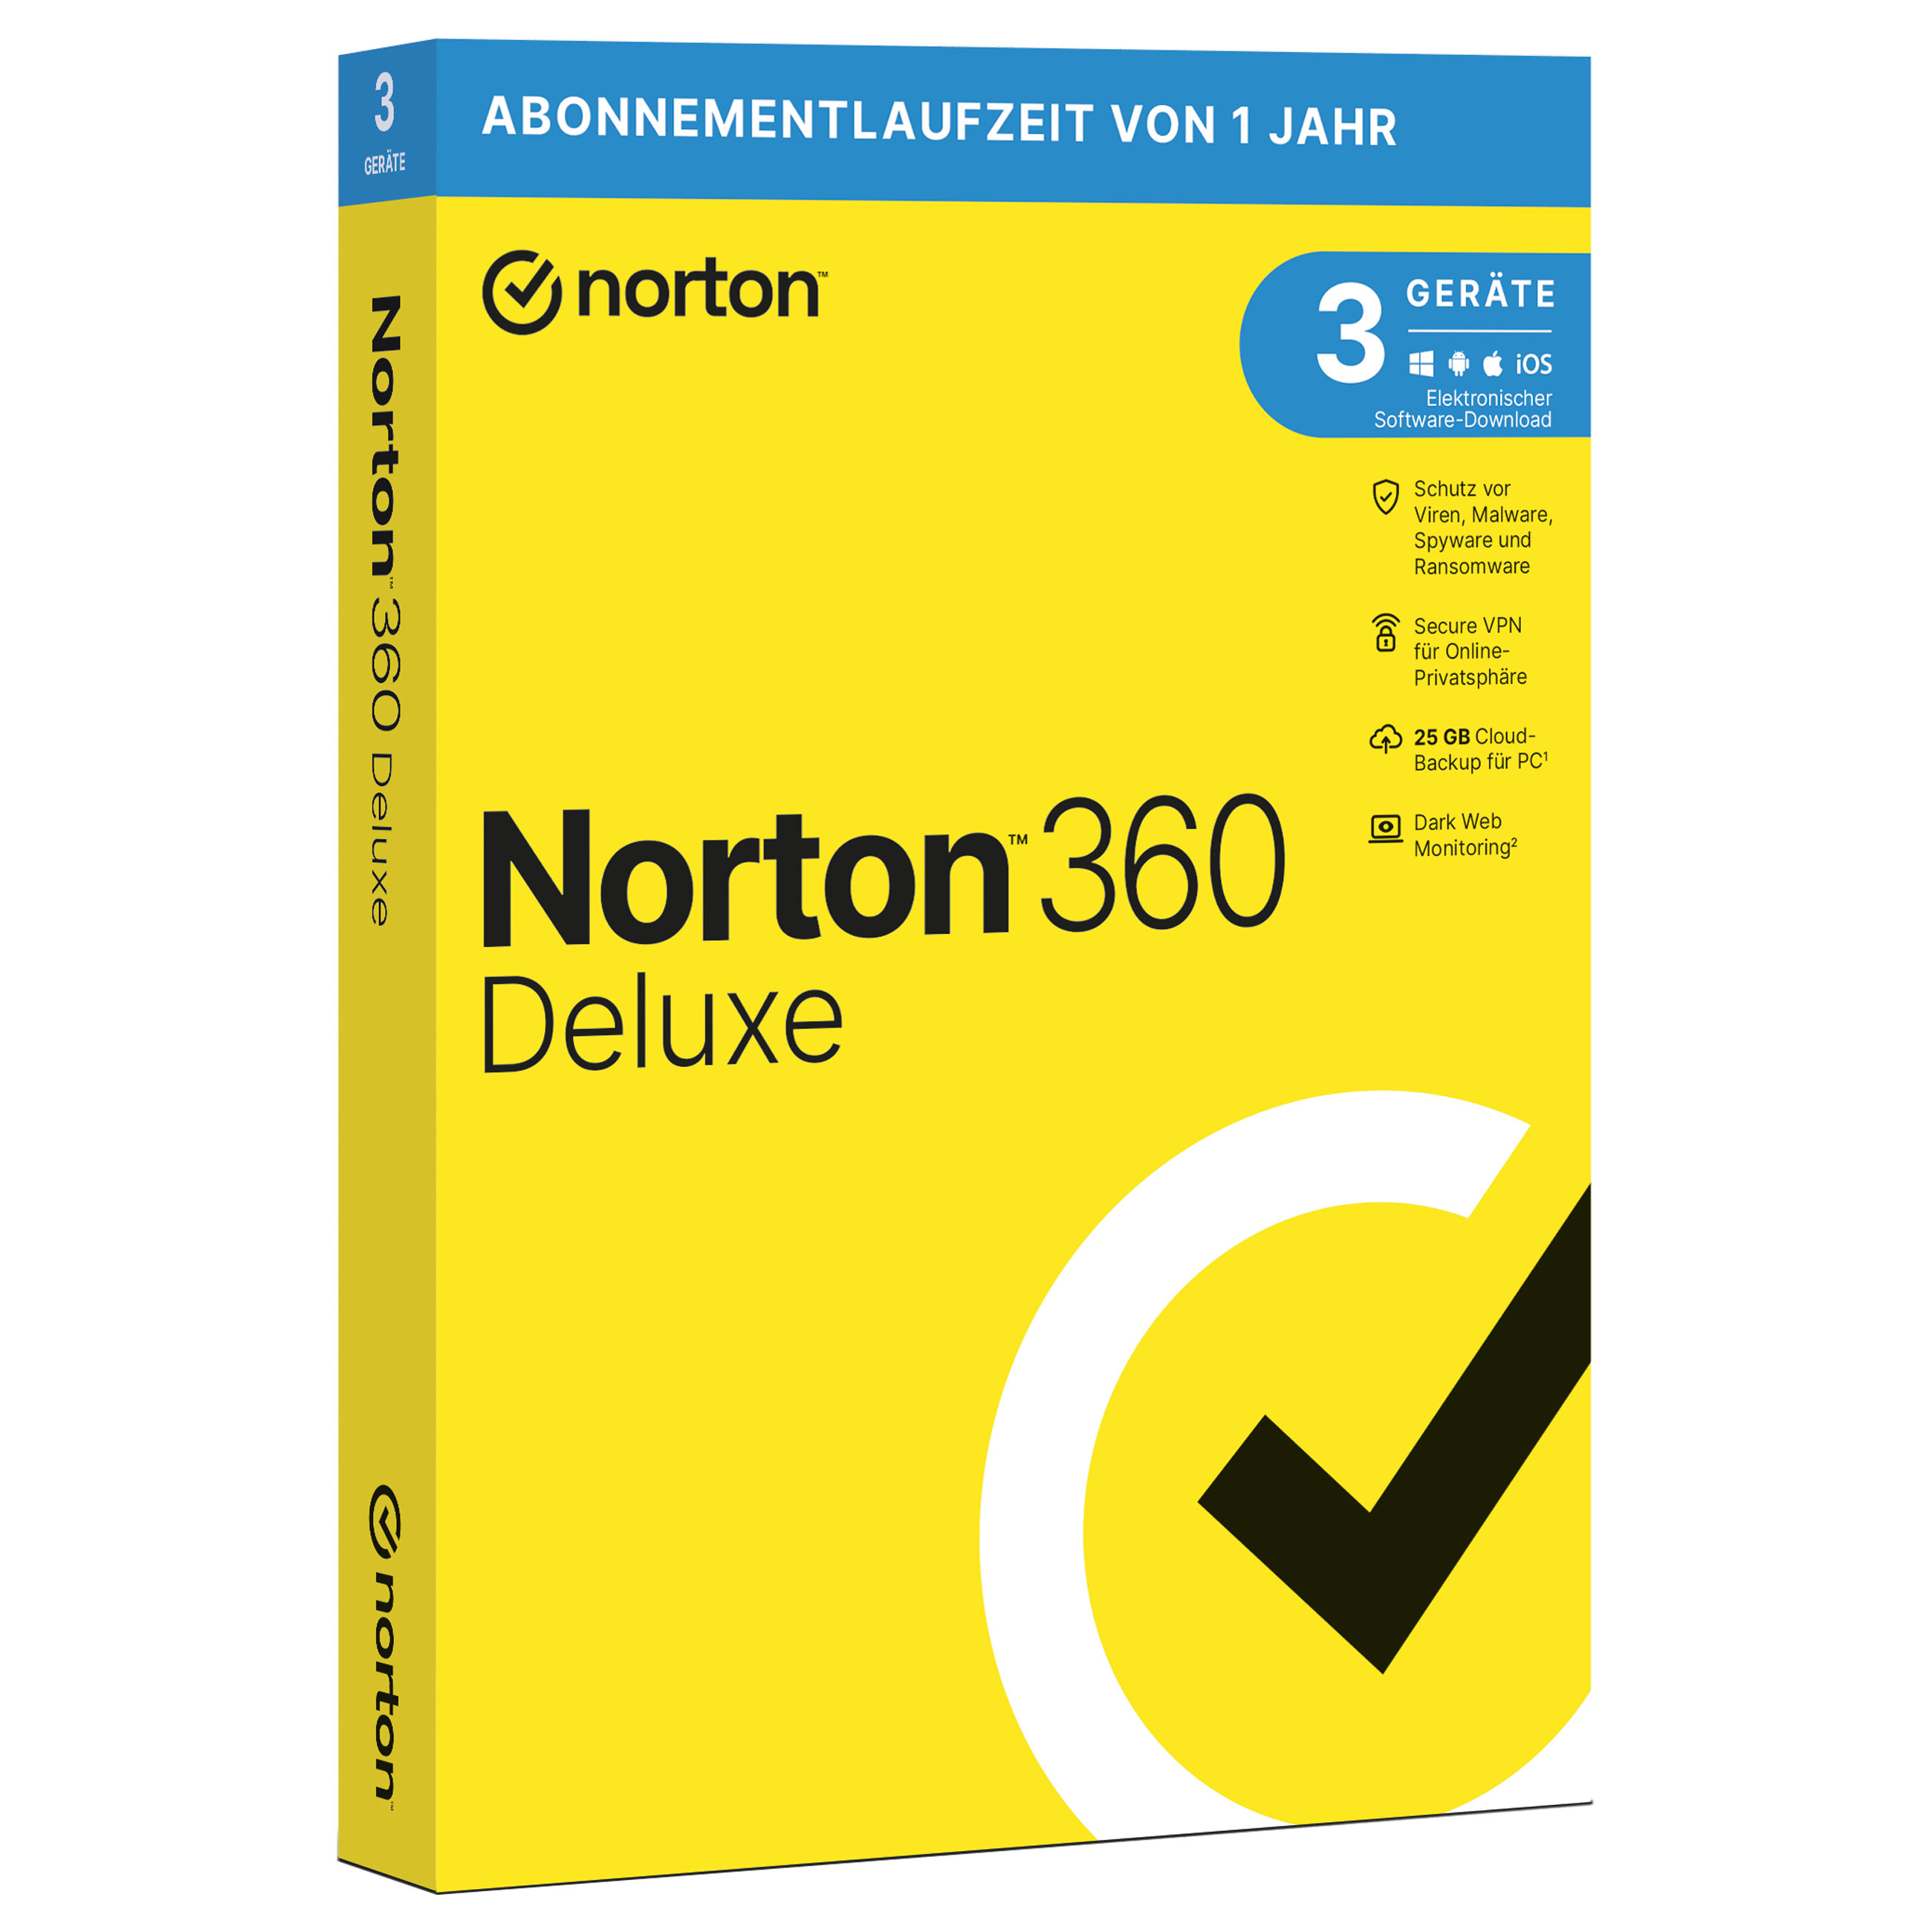 Norton 360 Deluxe - Internet Security Software 